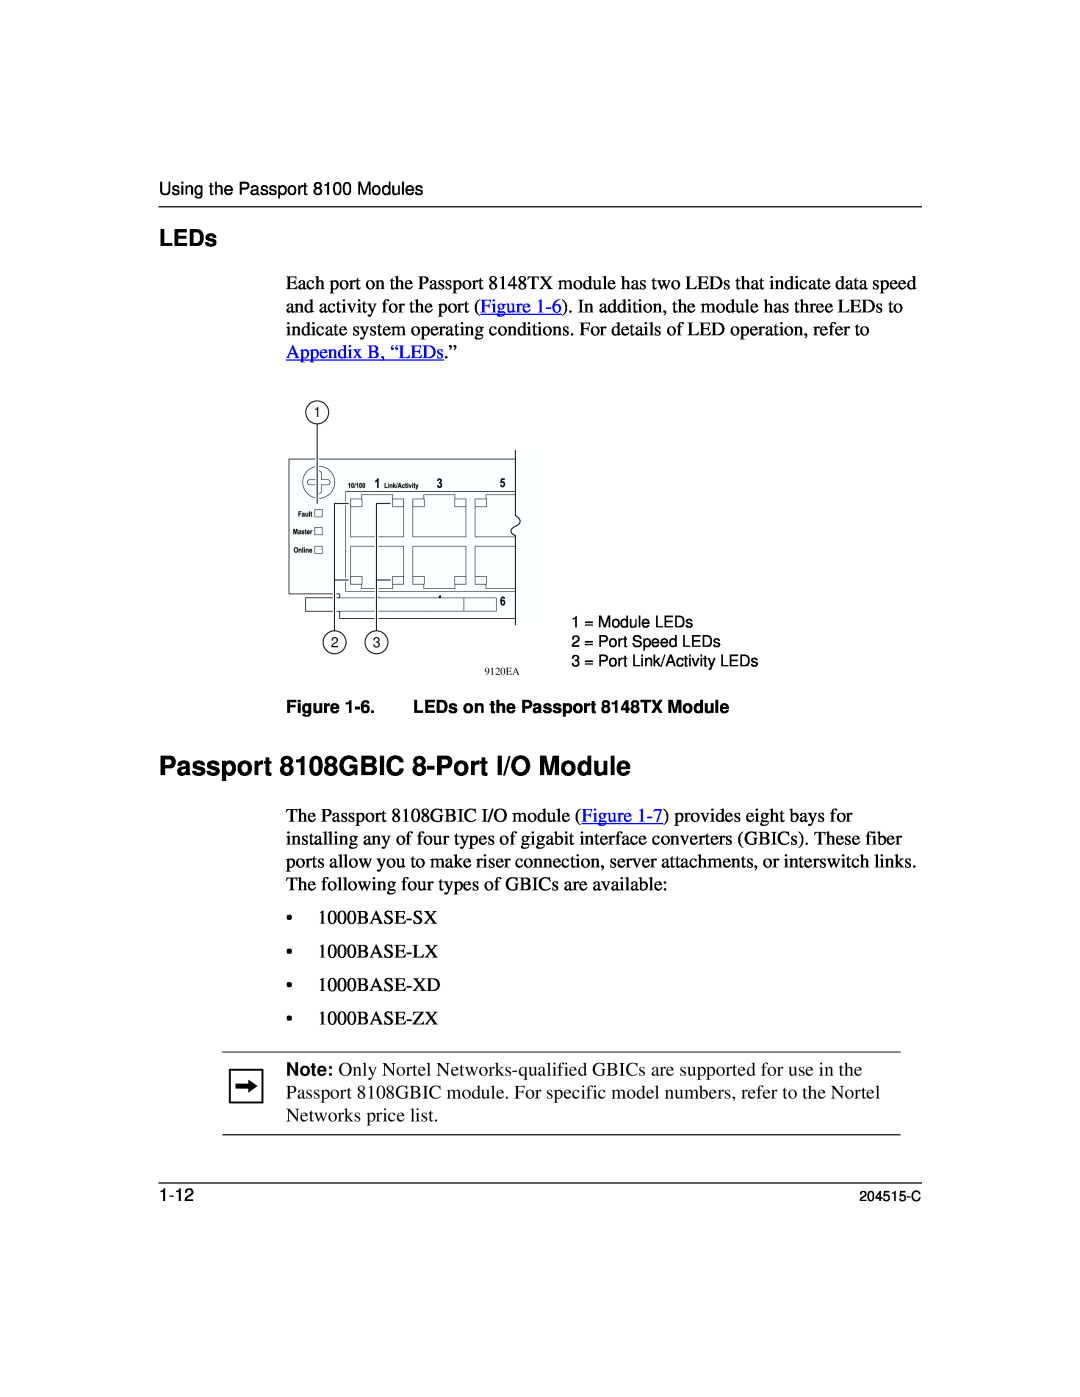 Nortel Networks 8100, 1000BASE-XD manual Passport 8108GBIC 8-Port I/O Module, LEDs 